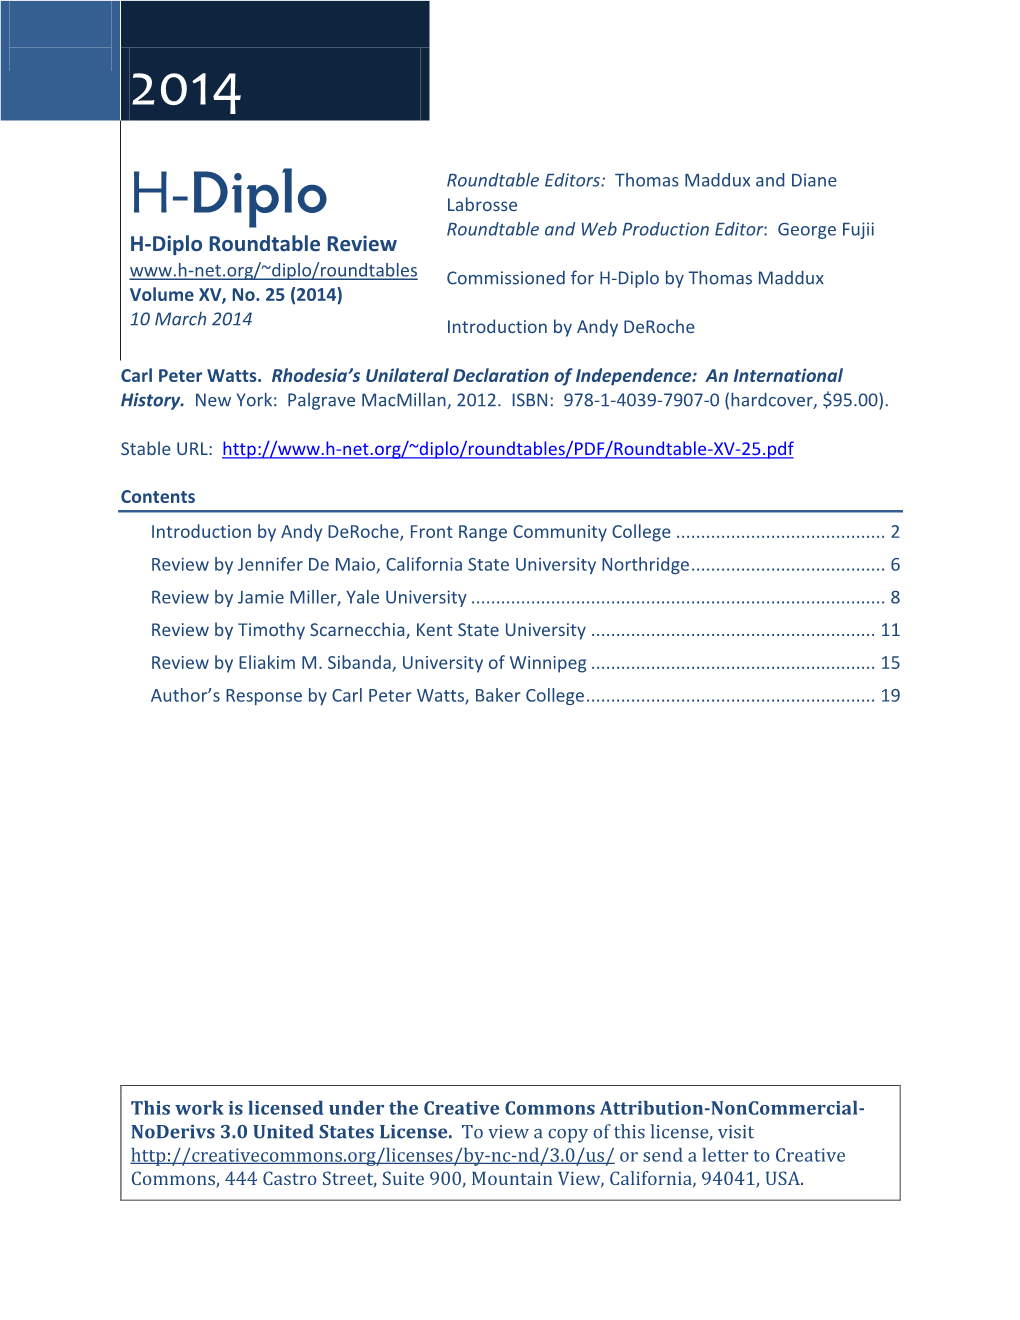 H-Diplo Roundtable, Vol. XV, No. 24 (2014)